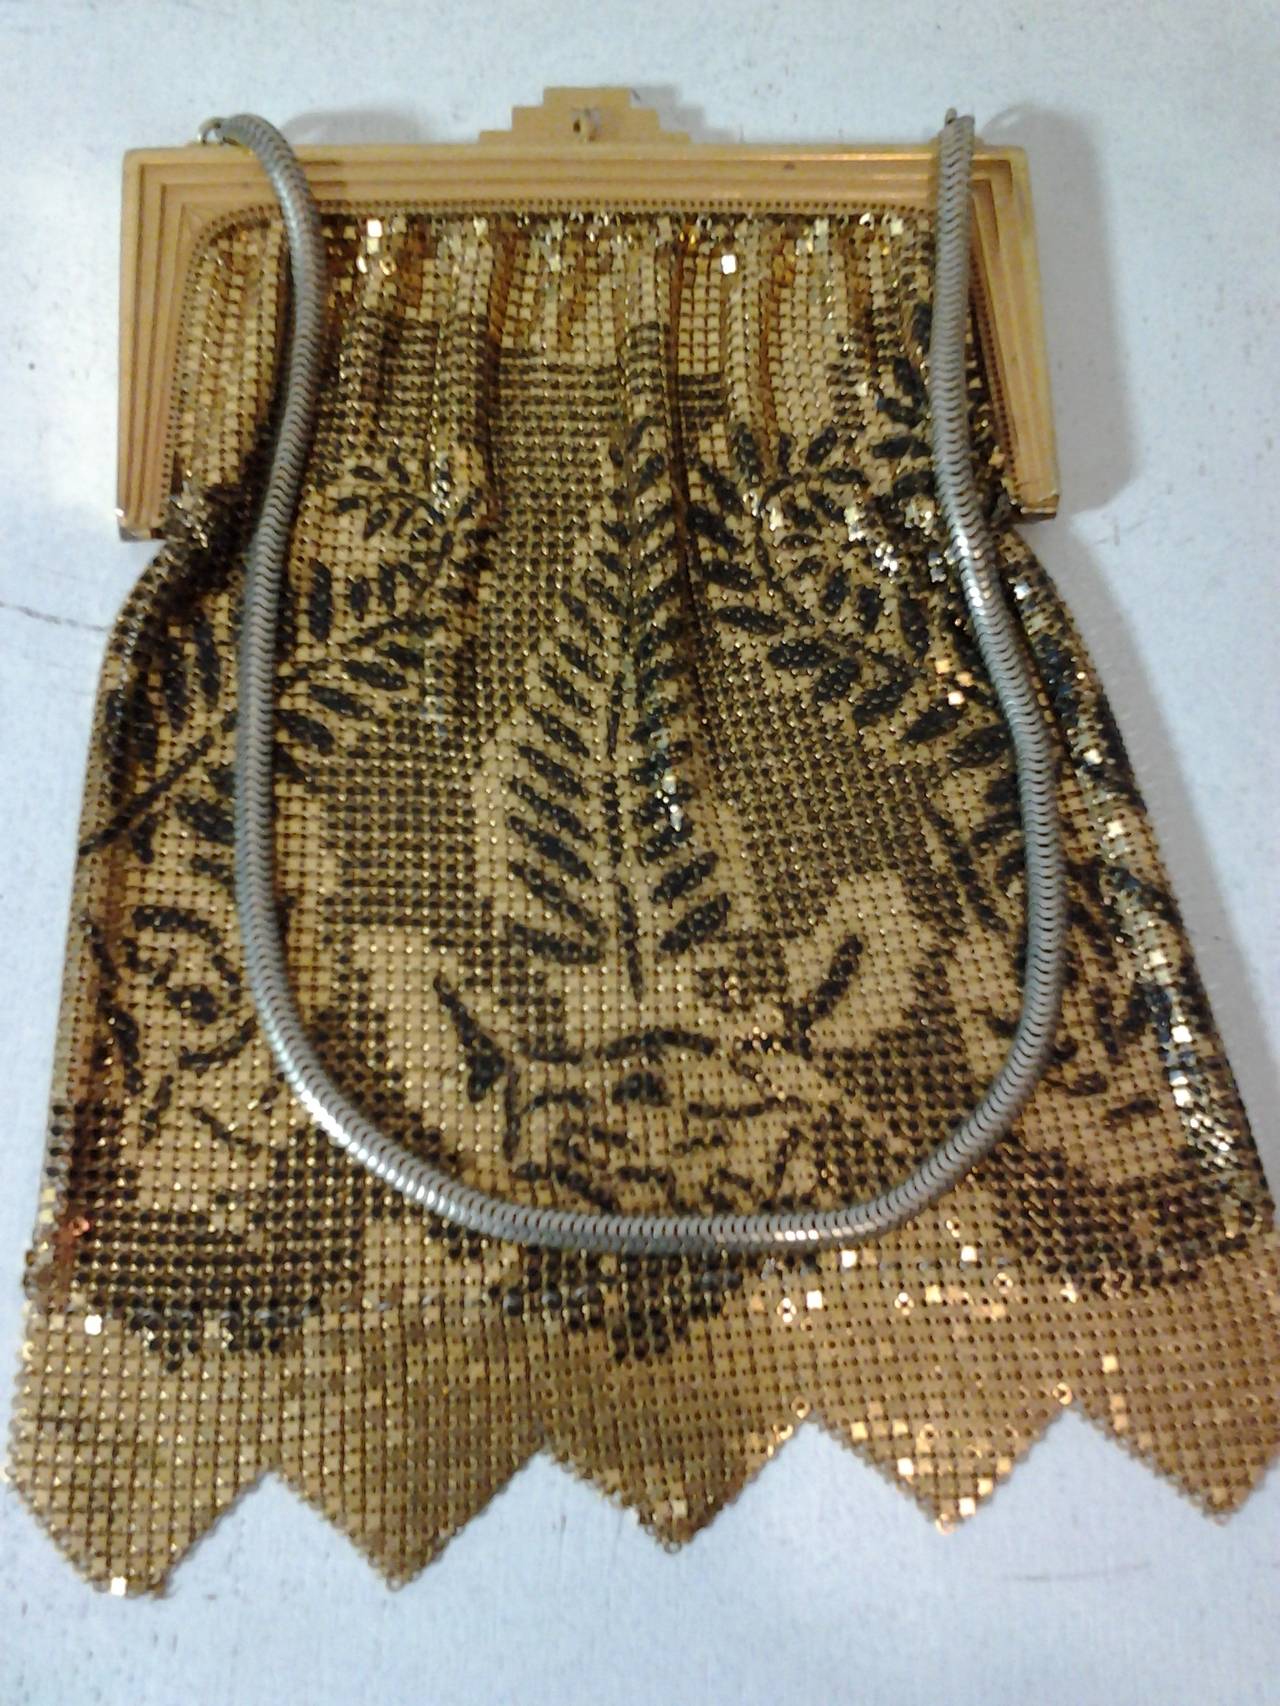 1920s Metal Mesh Evening Bag in Gold and Black Enamel at 1stdibs